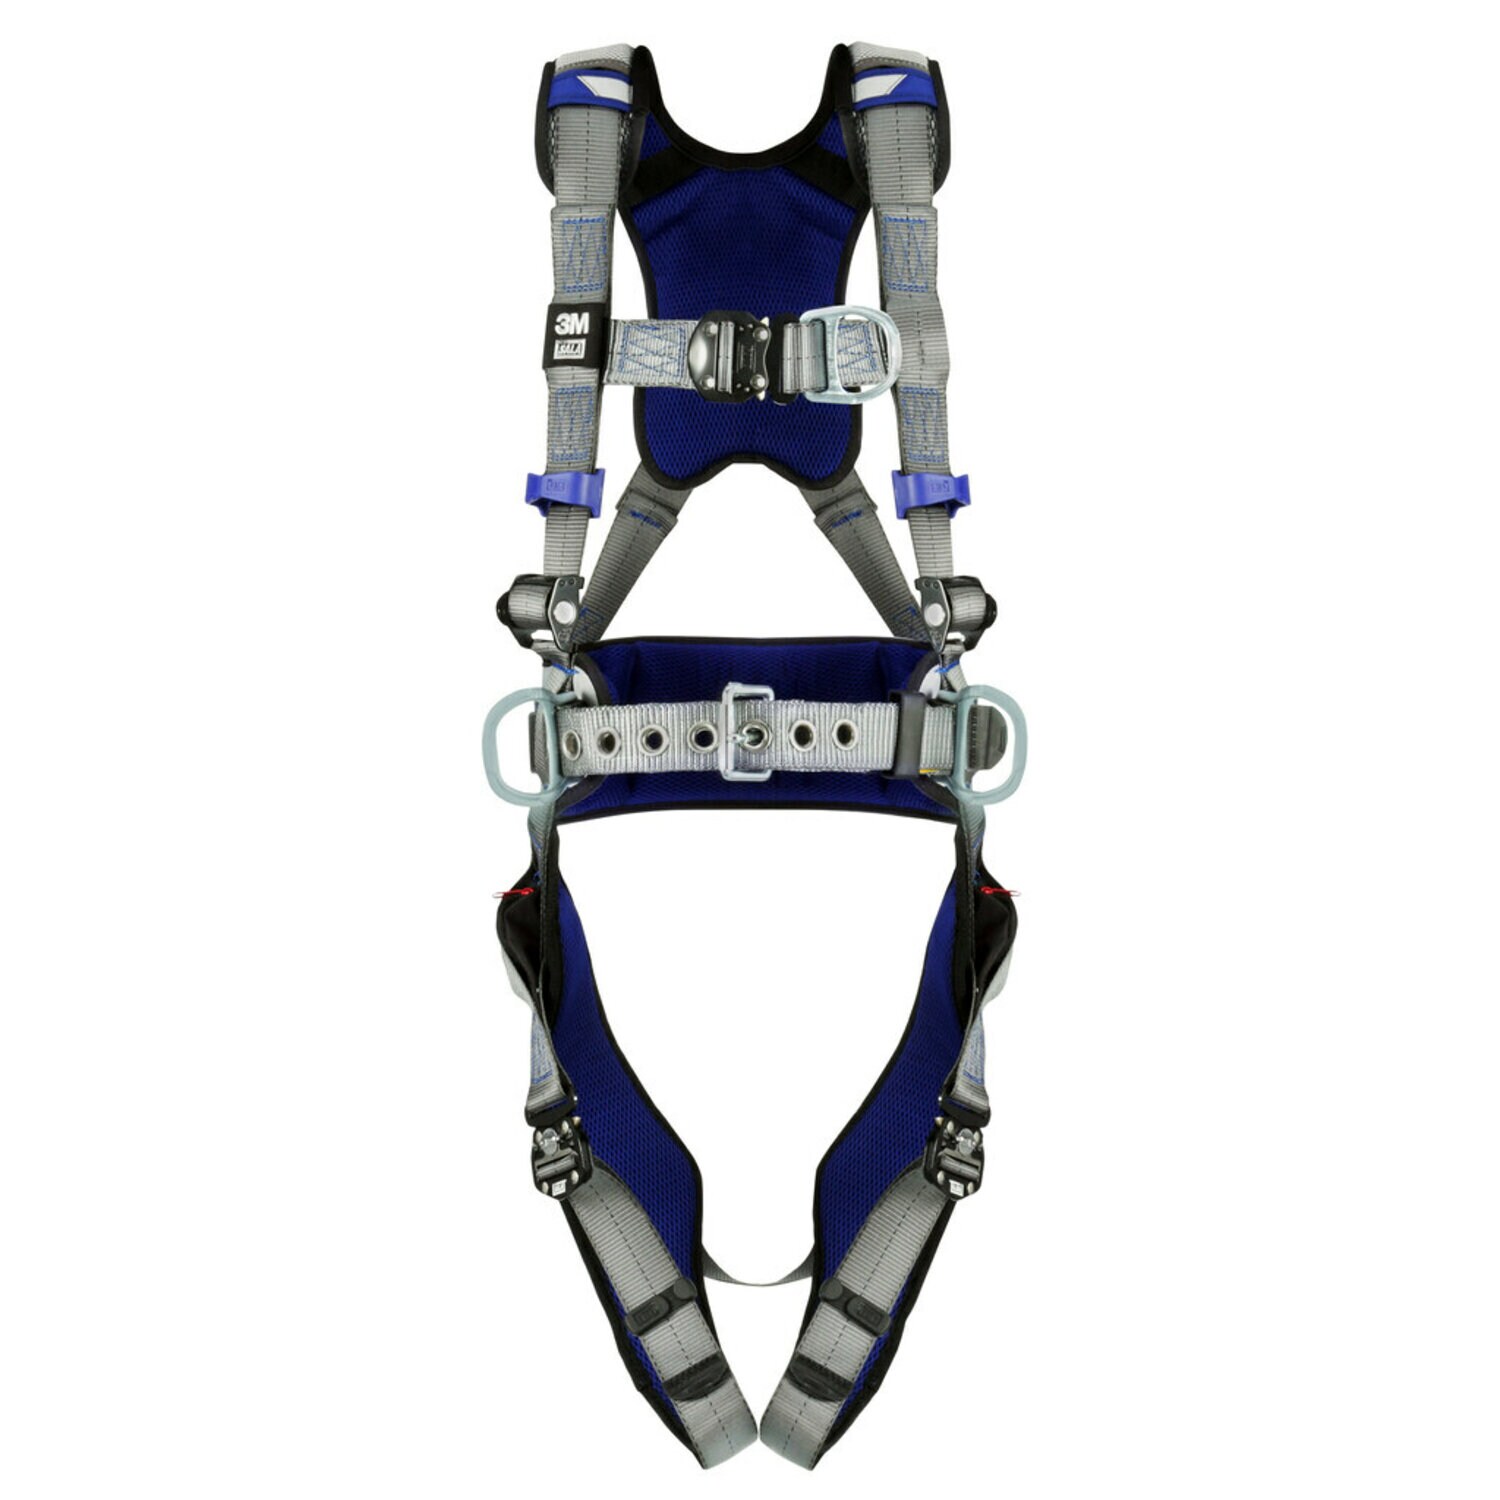 7012817844 - 3M DBI-SALA ExoFit X200 Comfort Construction Climbing/Positioning Safety Harness 1402110, Small